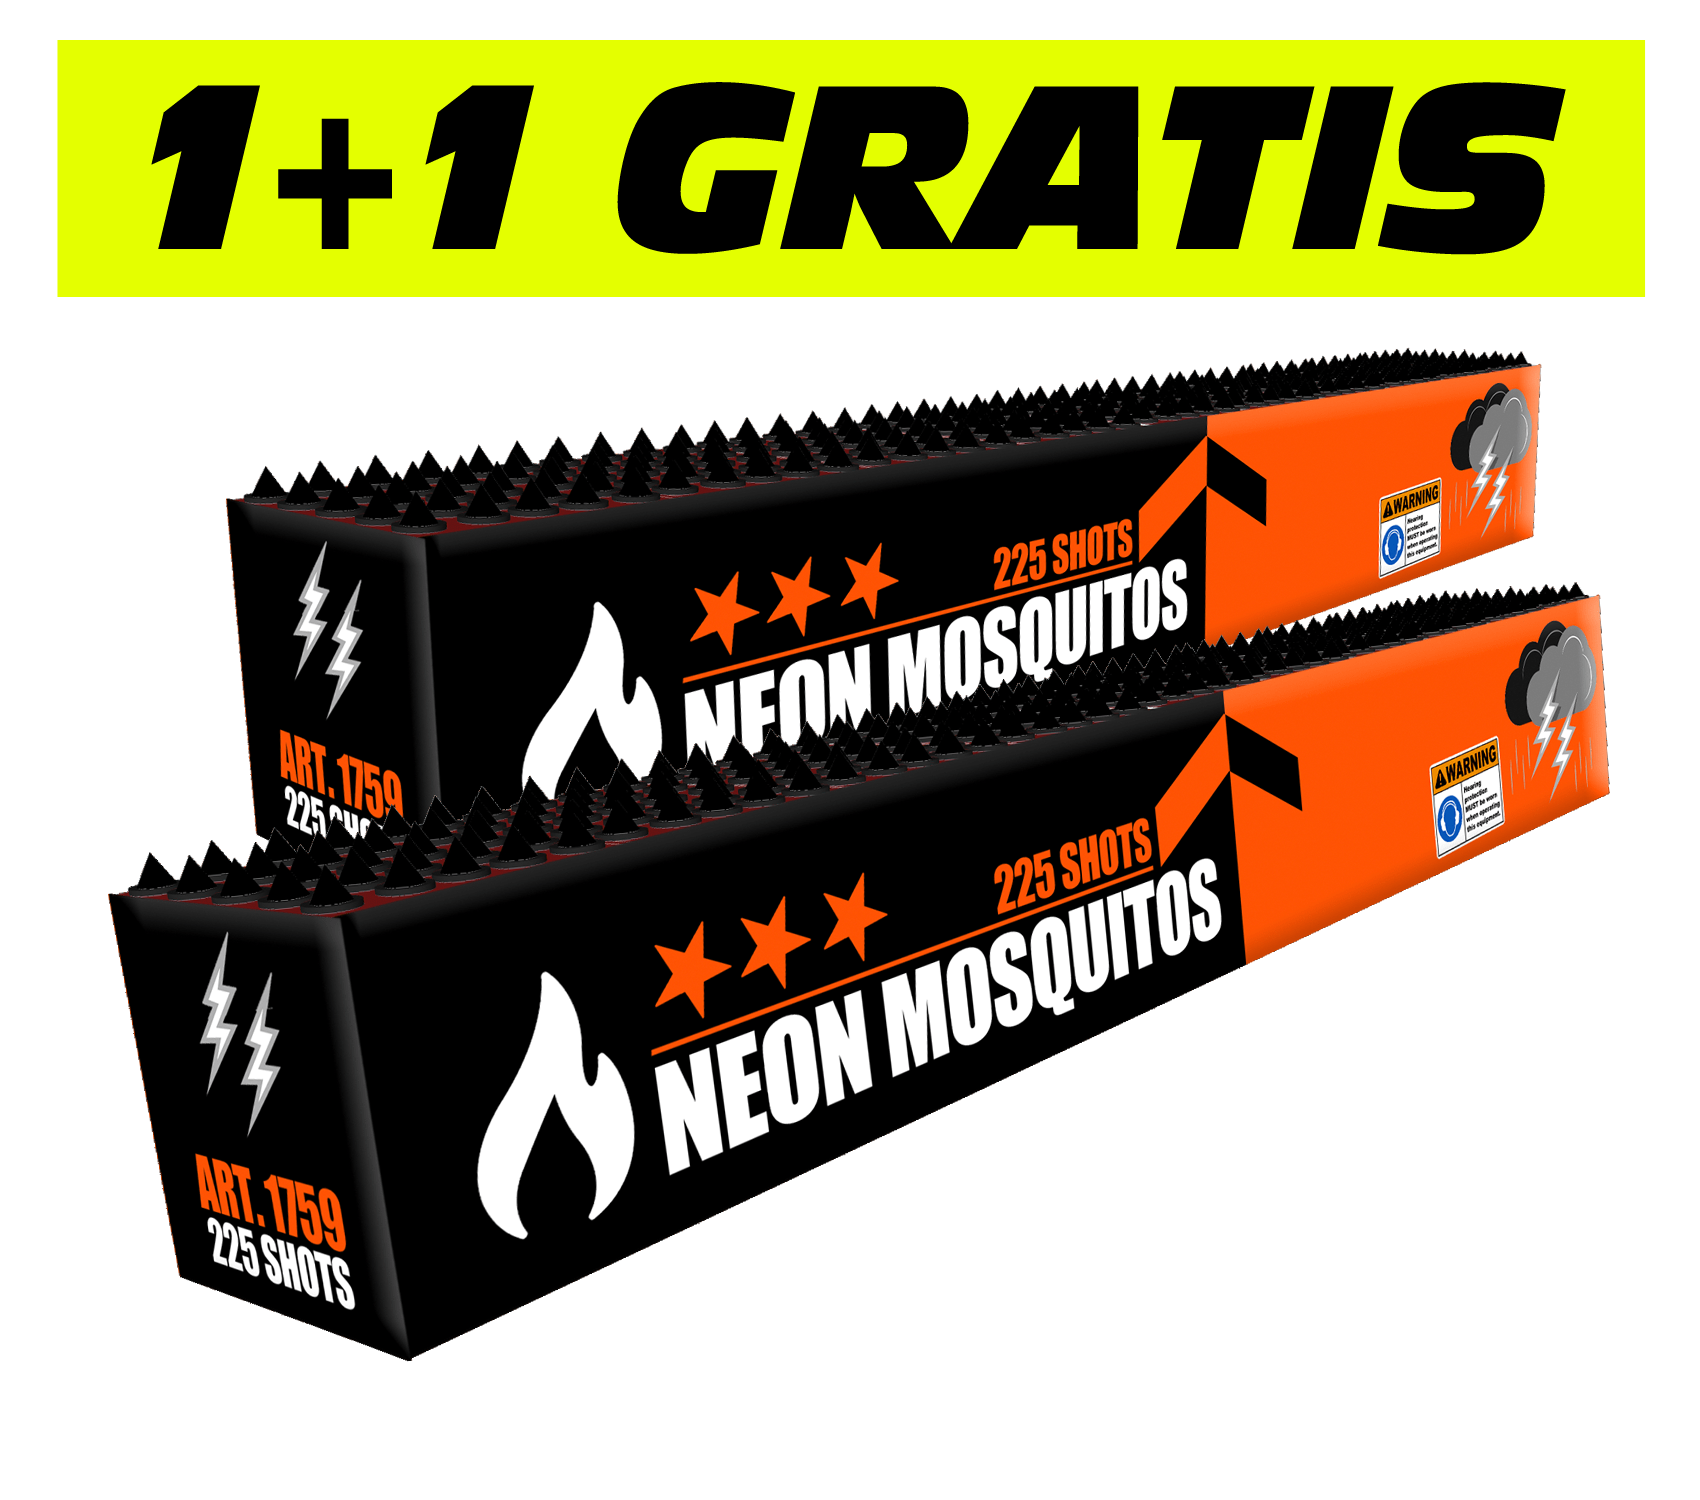 2x Neon Mosquitos 225 (1+1 GRATIS)